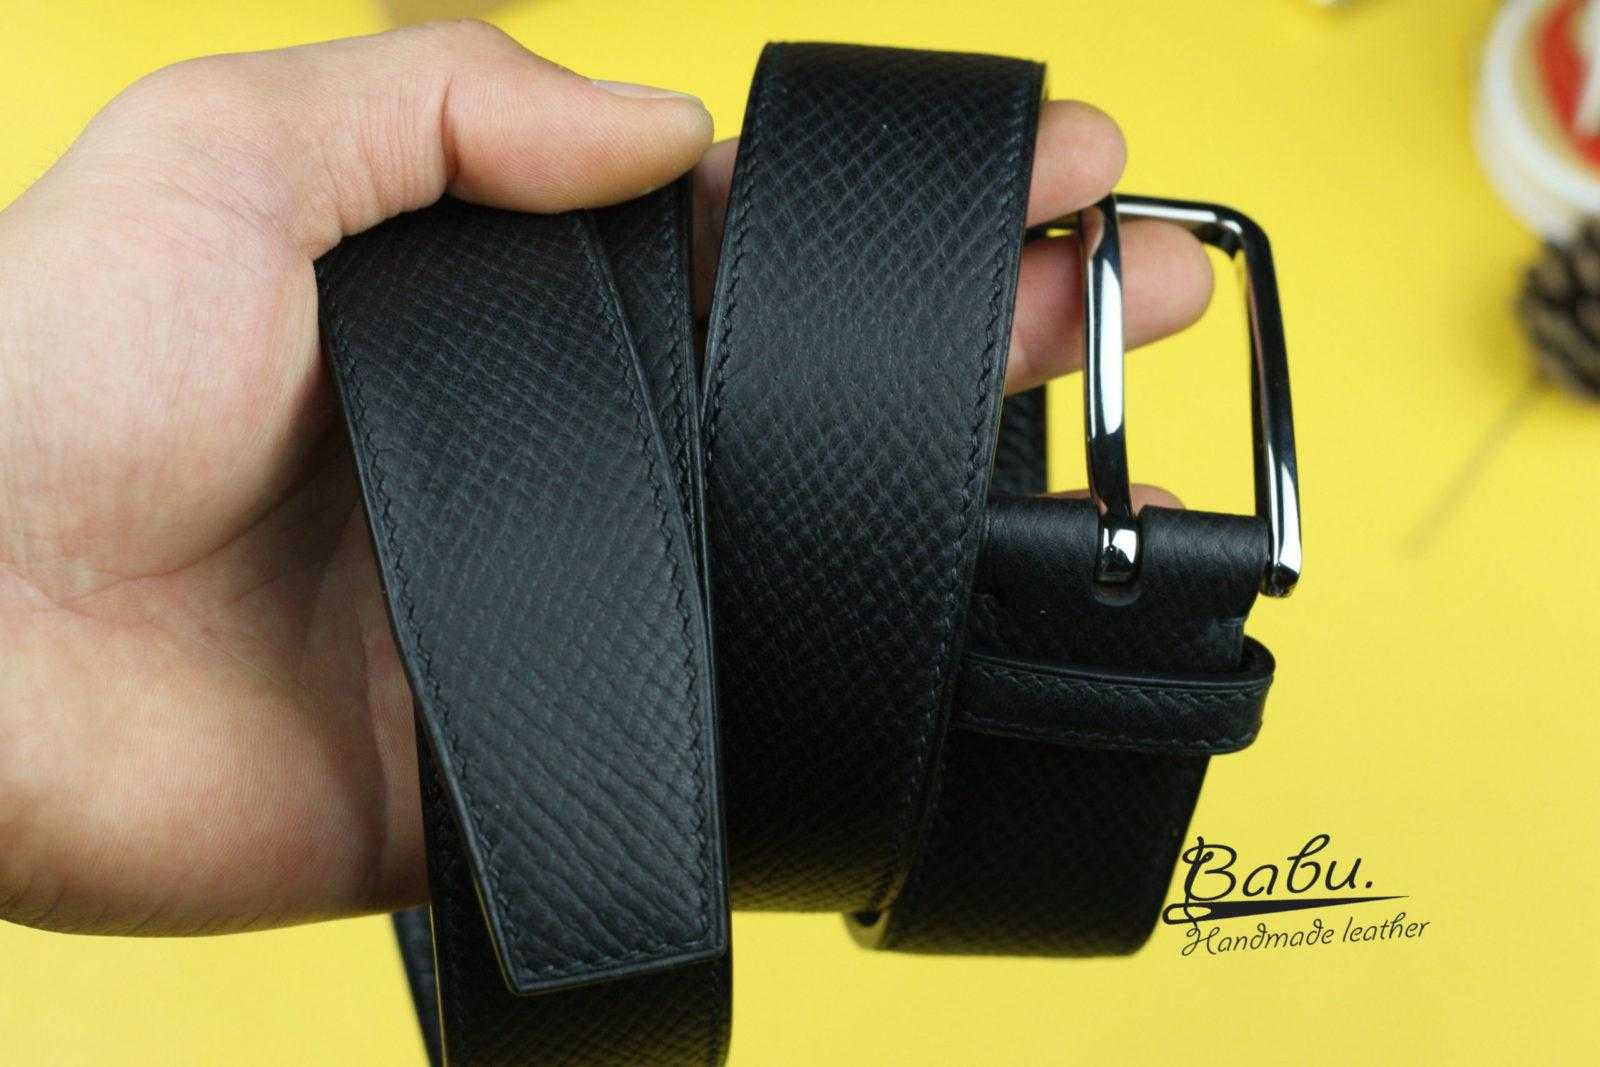 Handmade Black Utah Calf Leather Belt, Mens designer belts LB048